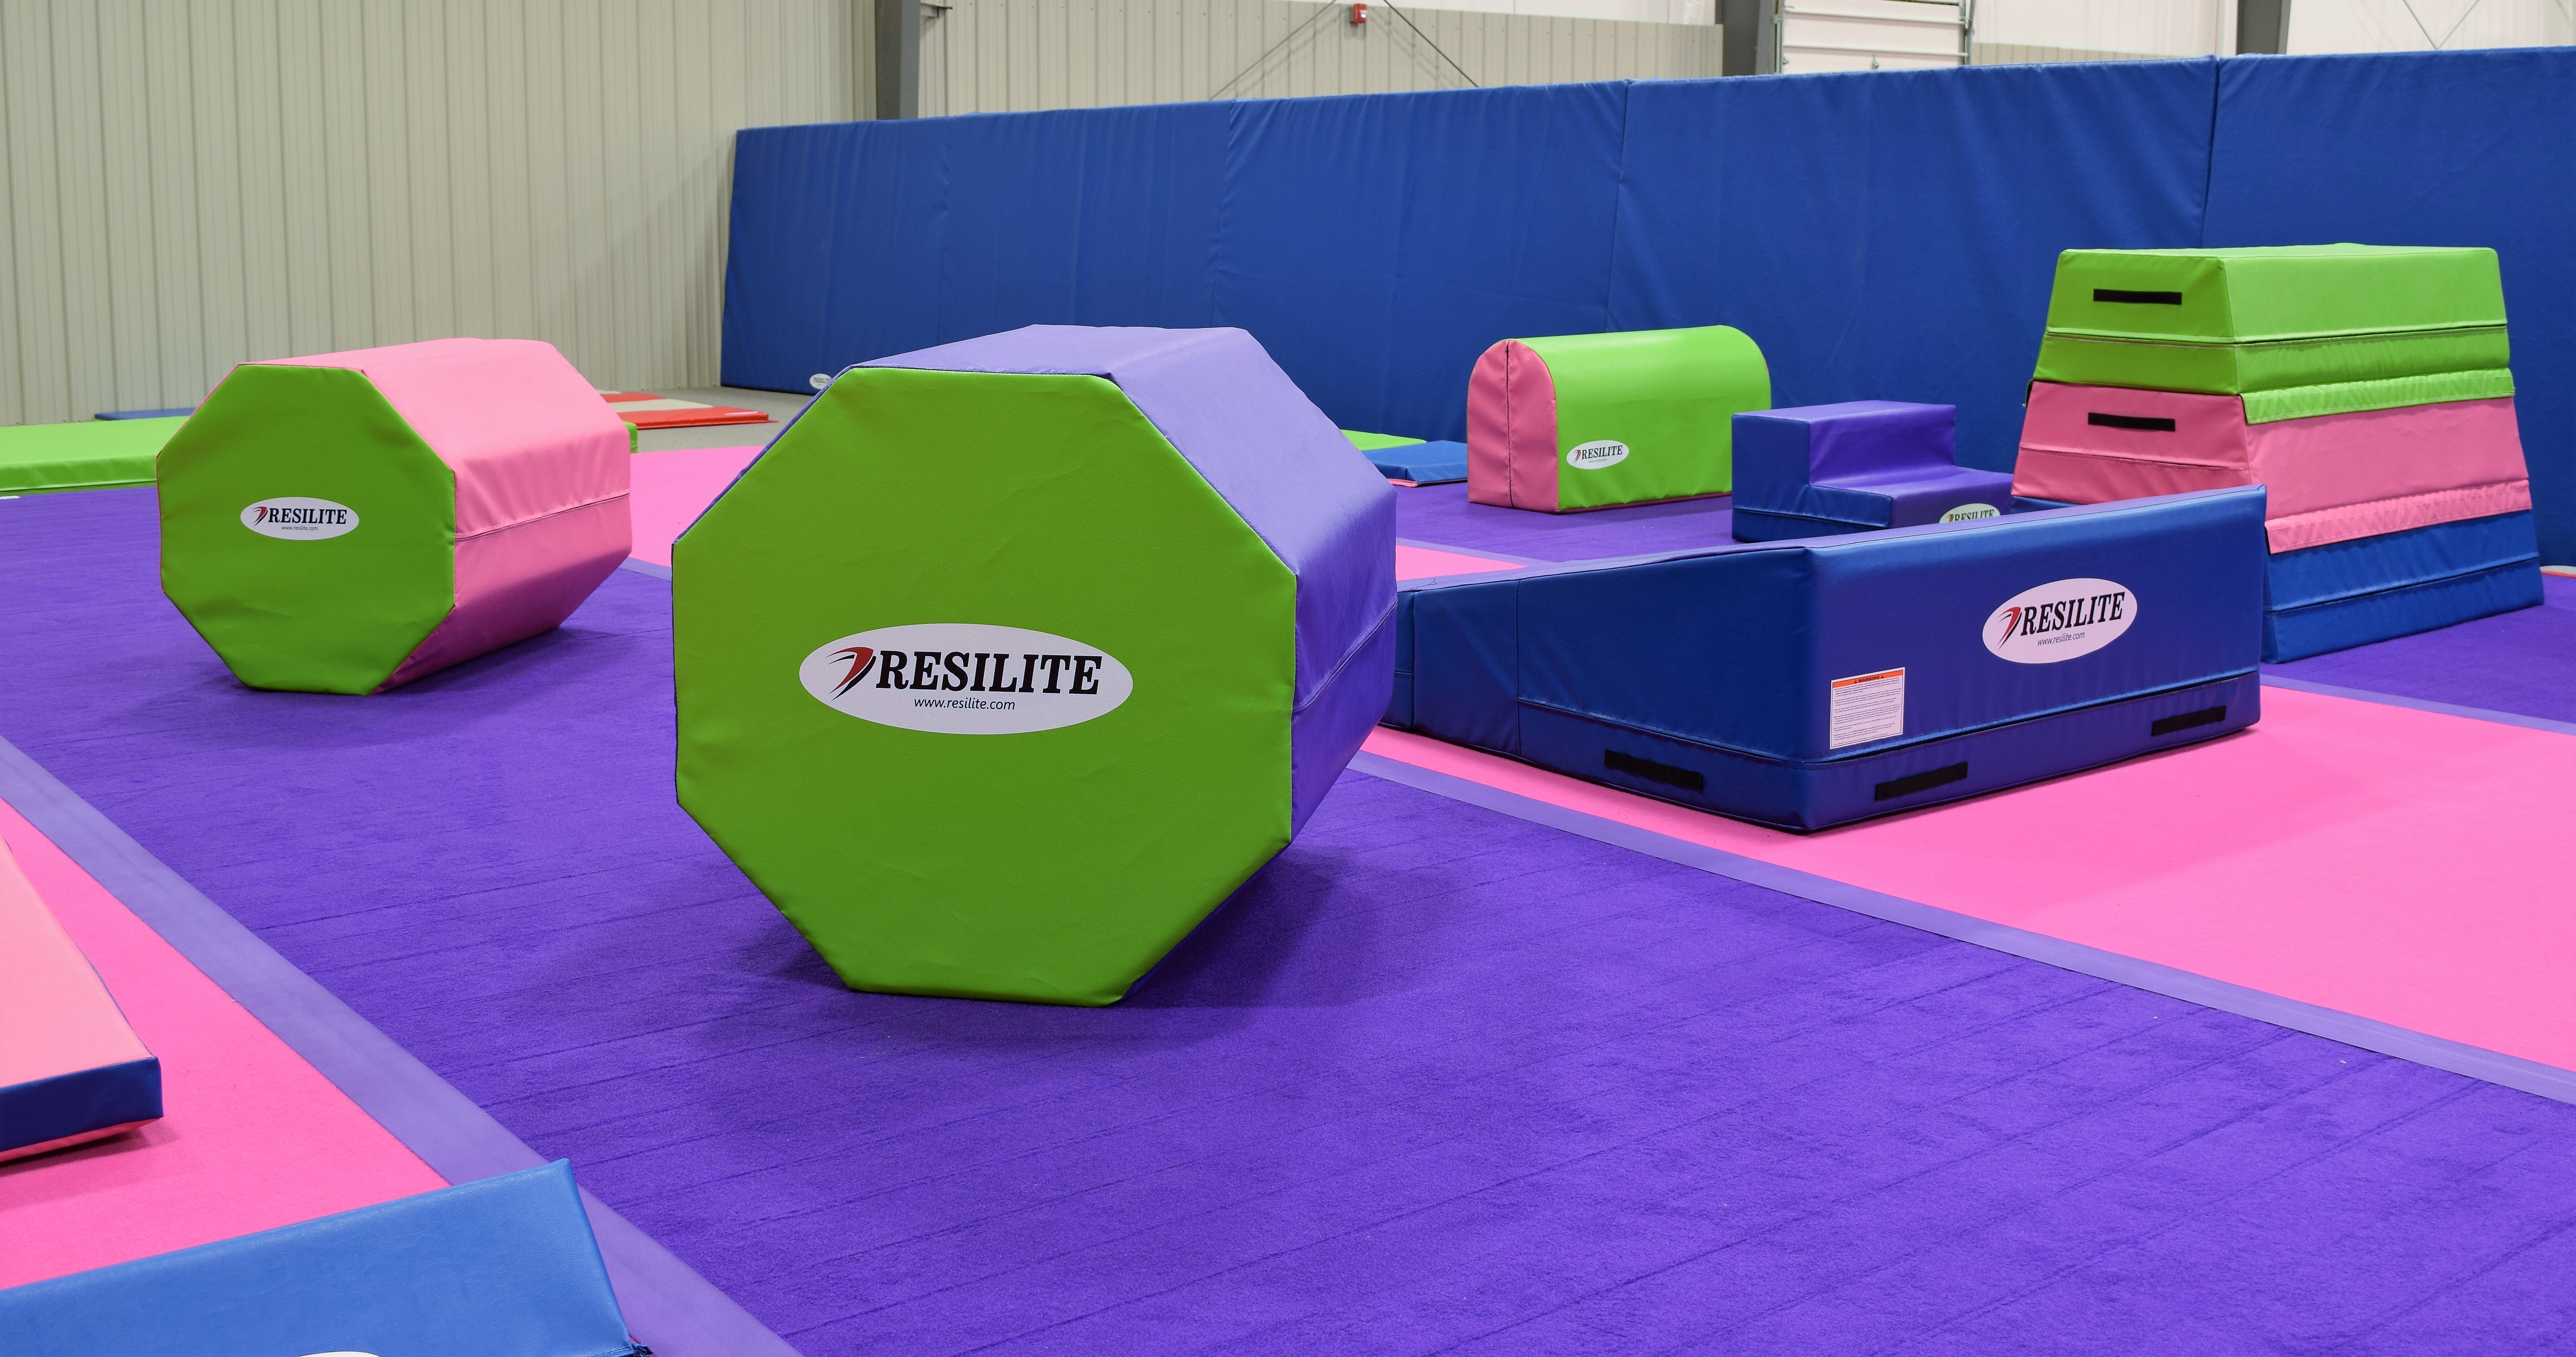 Resilite’s Gymnastics products